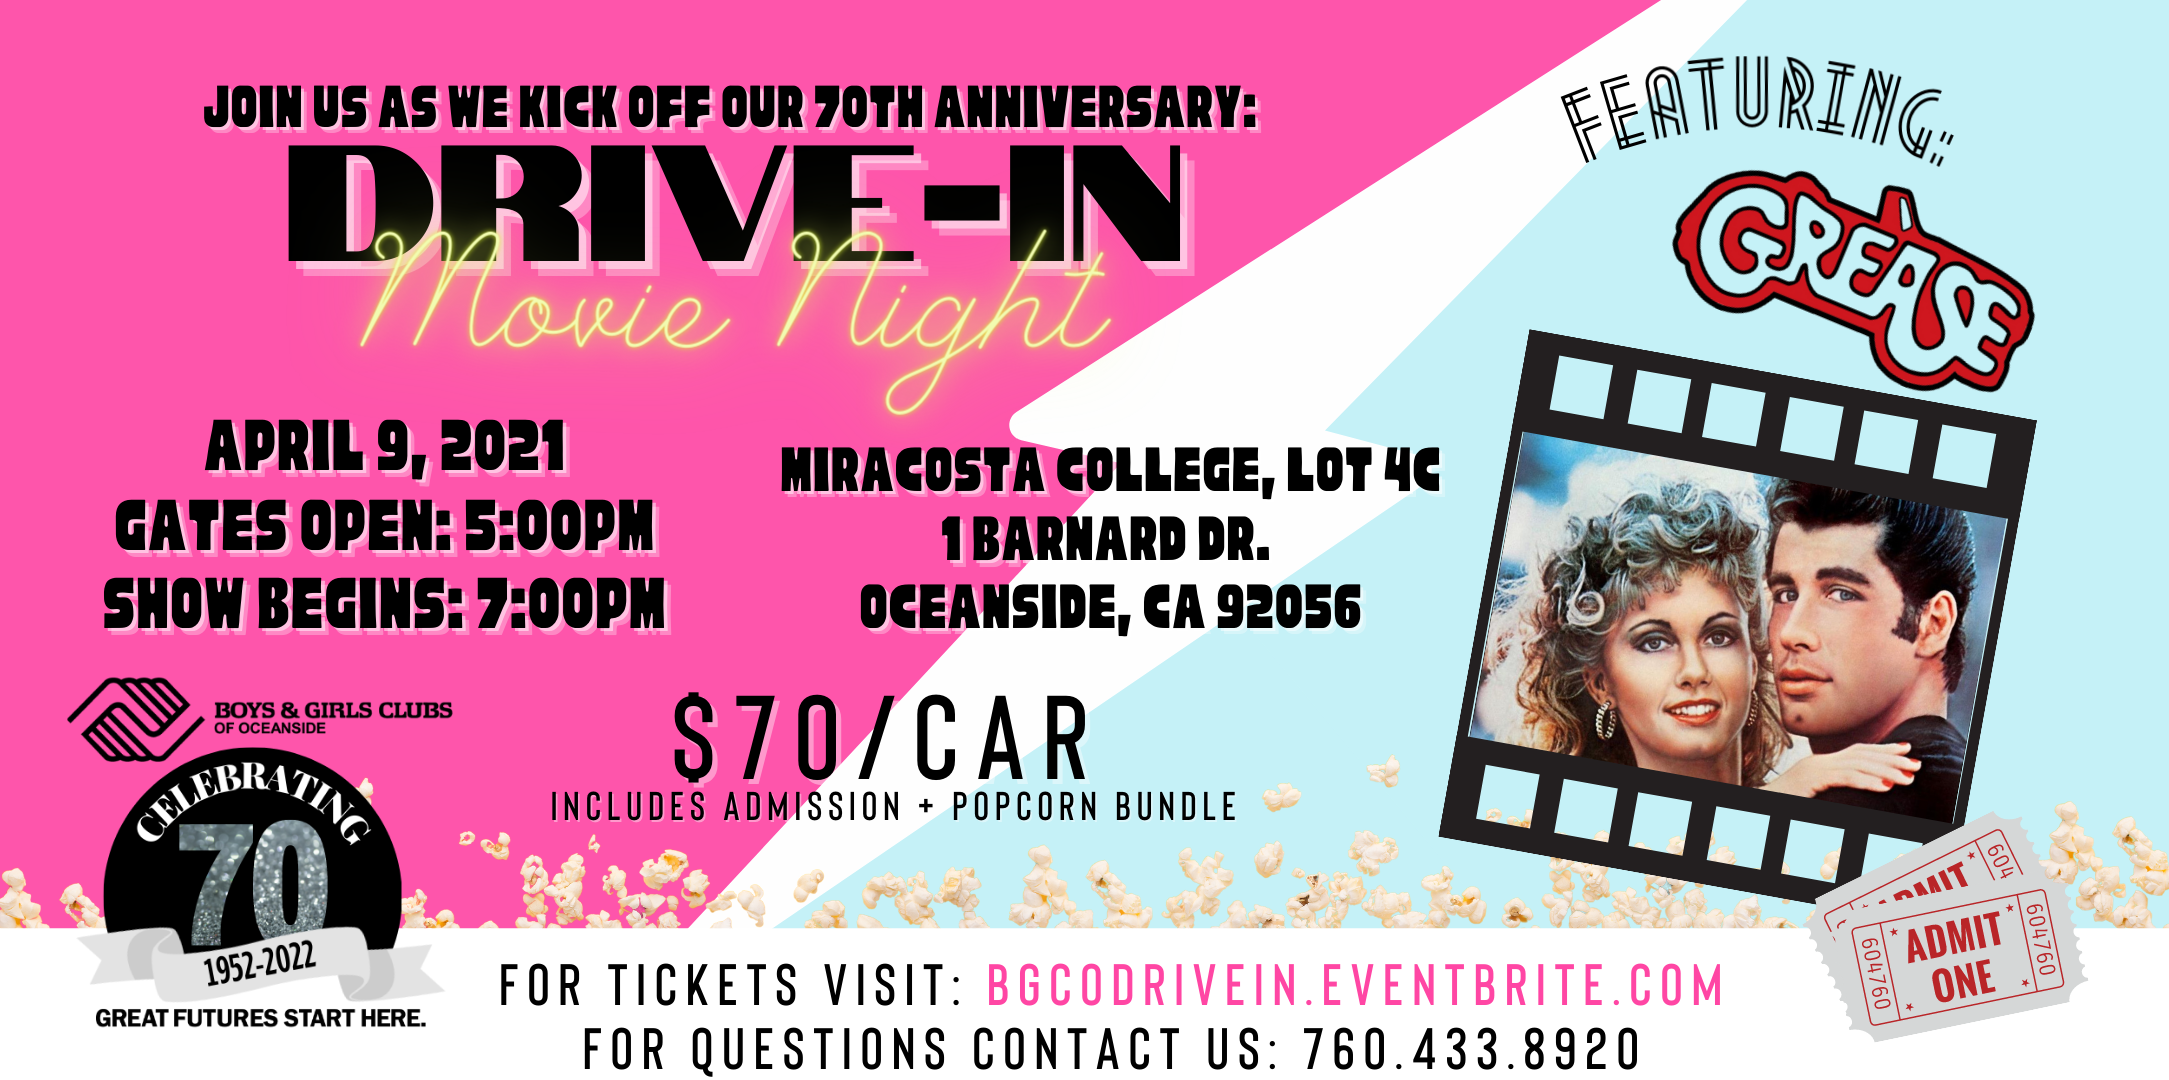 Drive-In Movie Night featuring Grease. For tickets visit: bgcodrivein.eventbrite.com